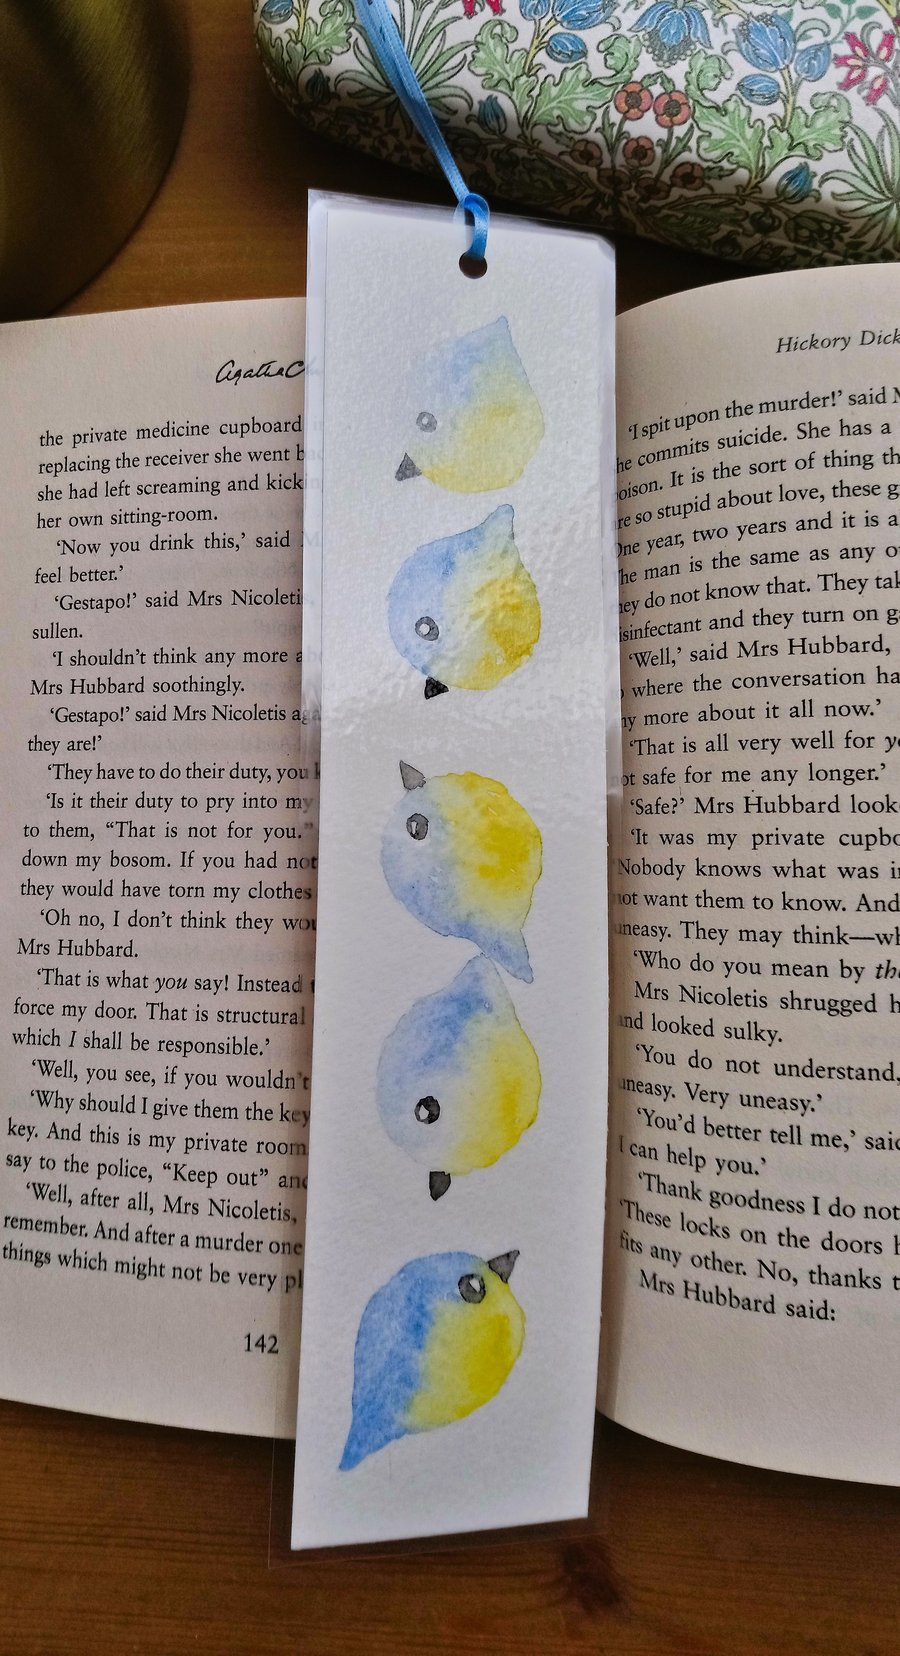 Original Hand Painted Blue & Yellow Birds Bookmark